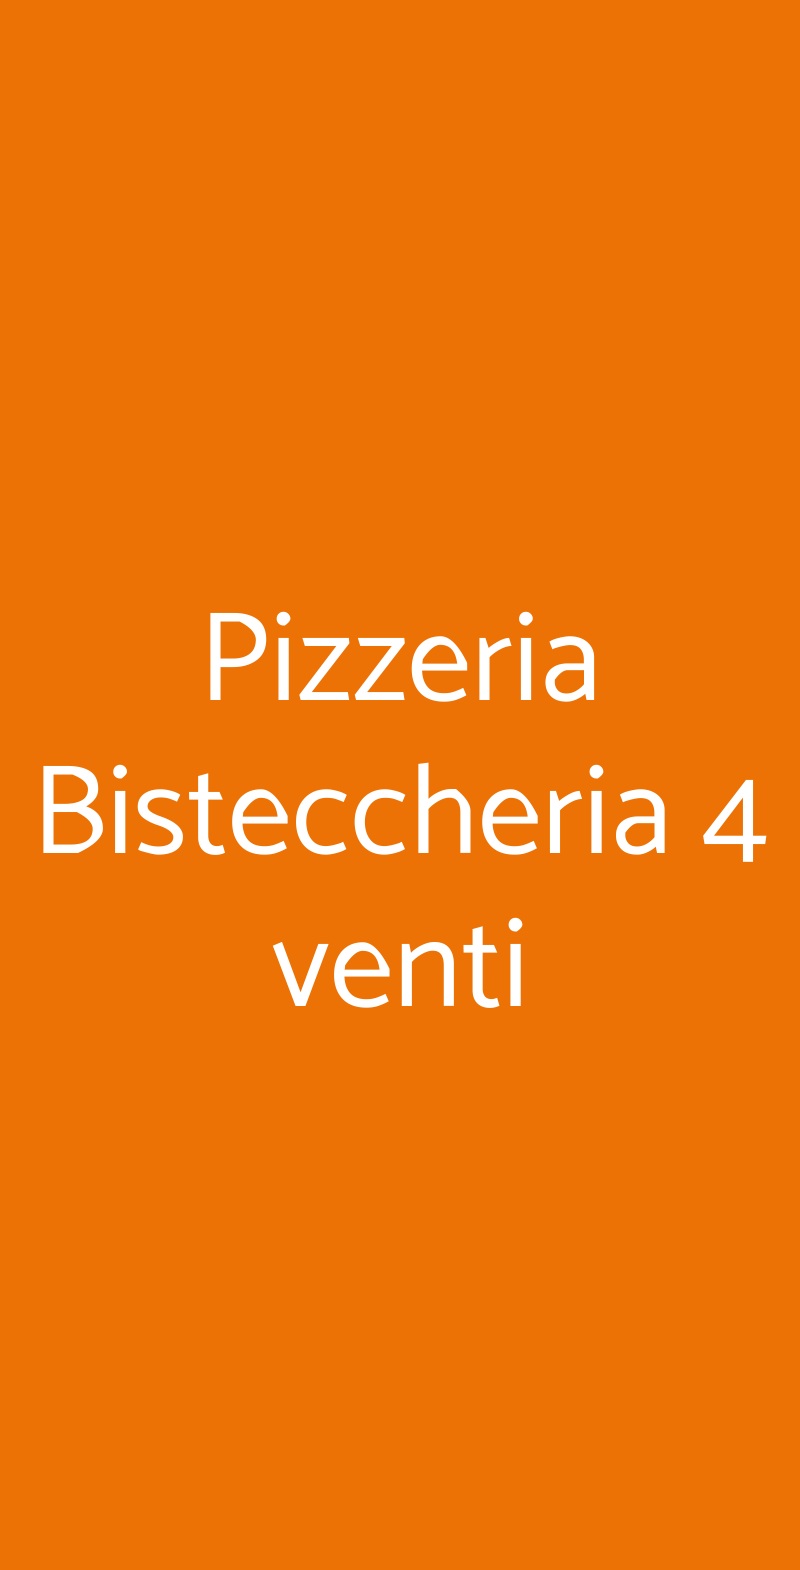 Pizzeria Bisteccheria 4 venti Roma menù 1 pagina